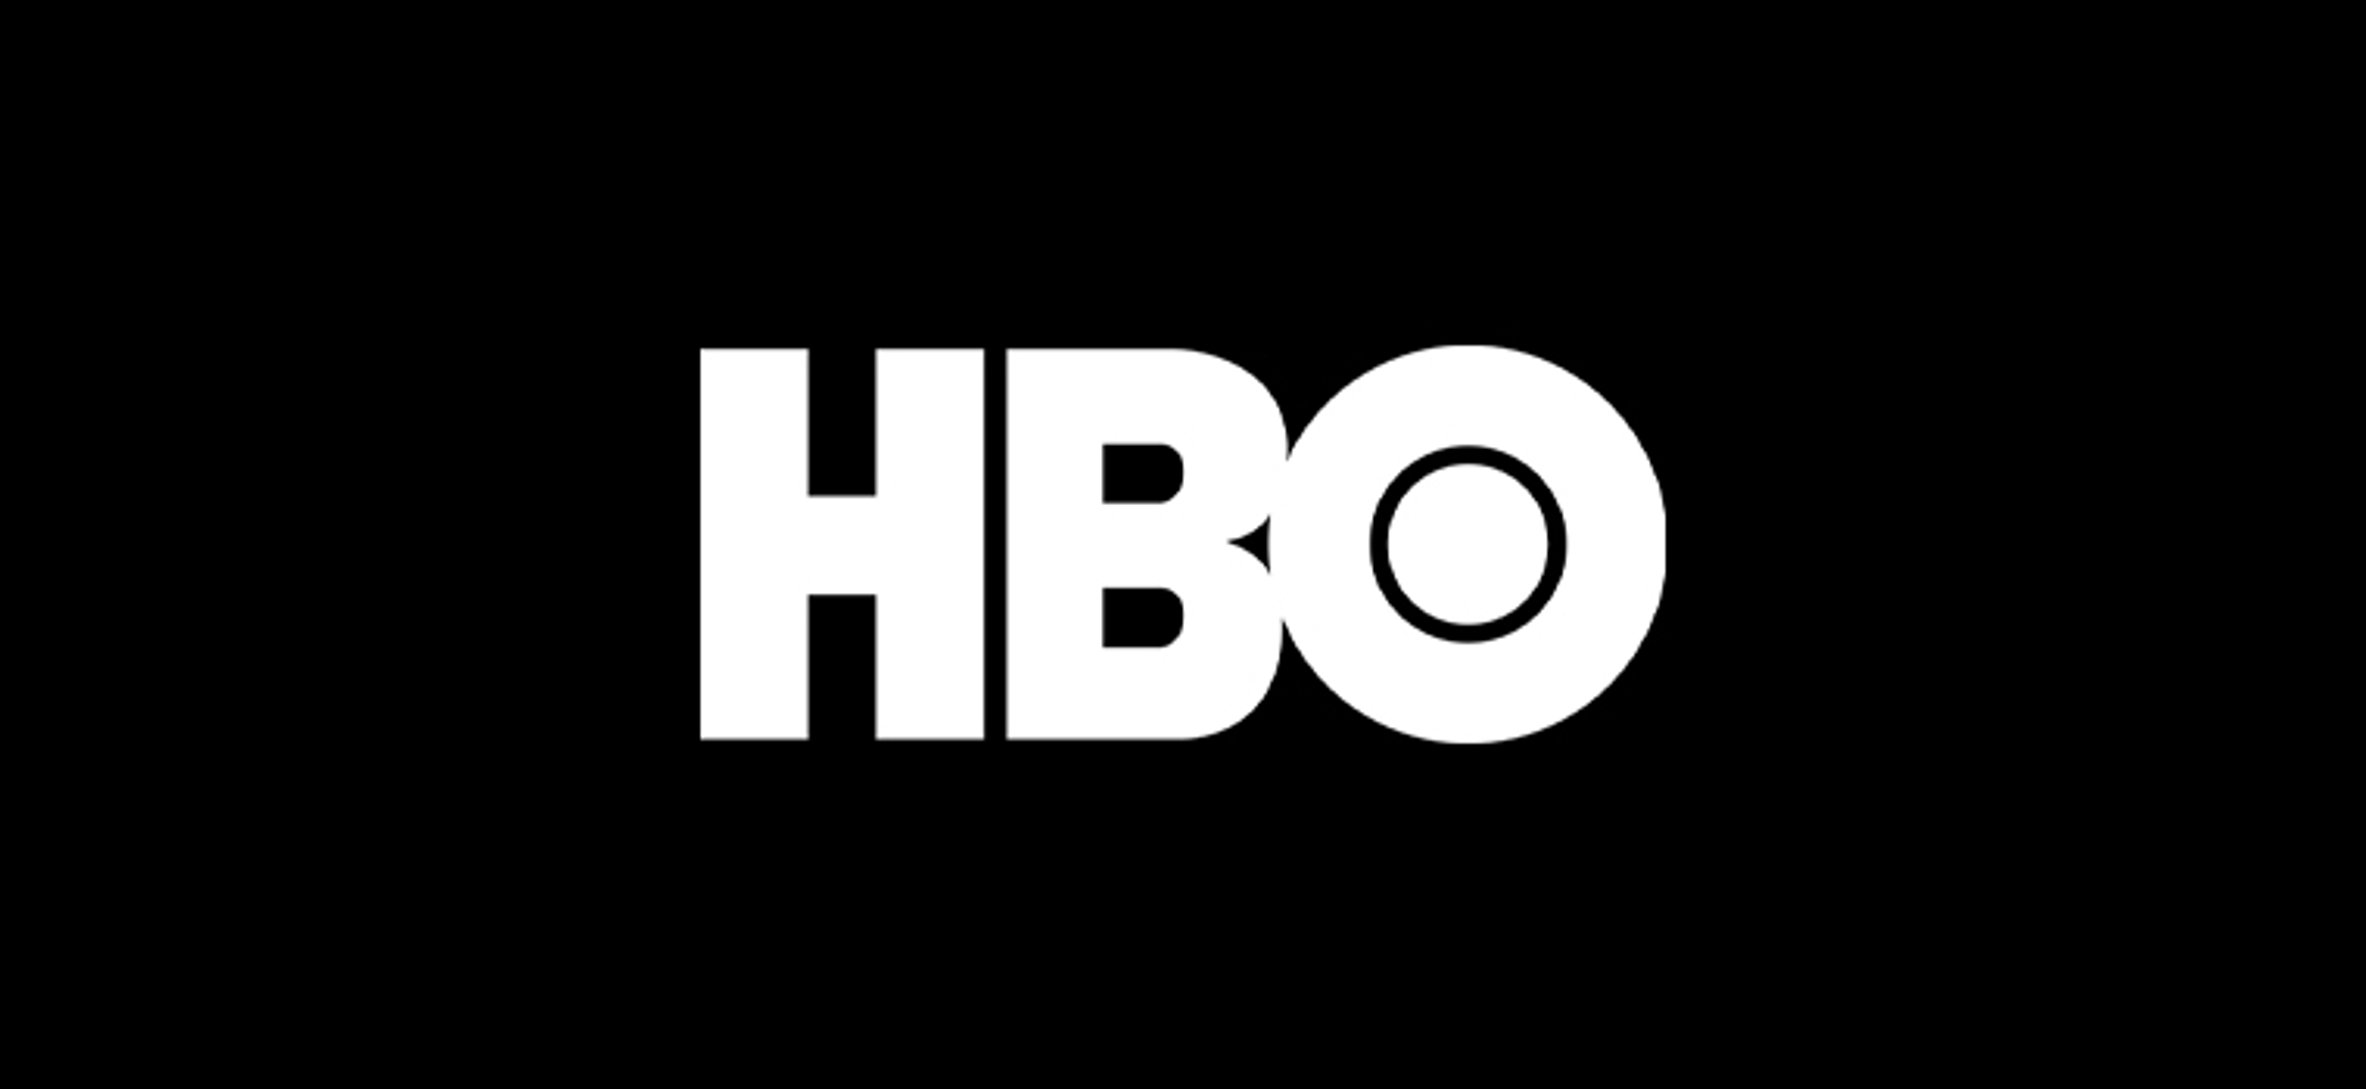 Untitled HBO Show Seeking Skaters!